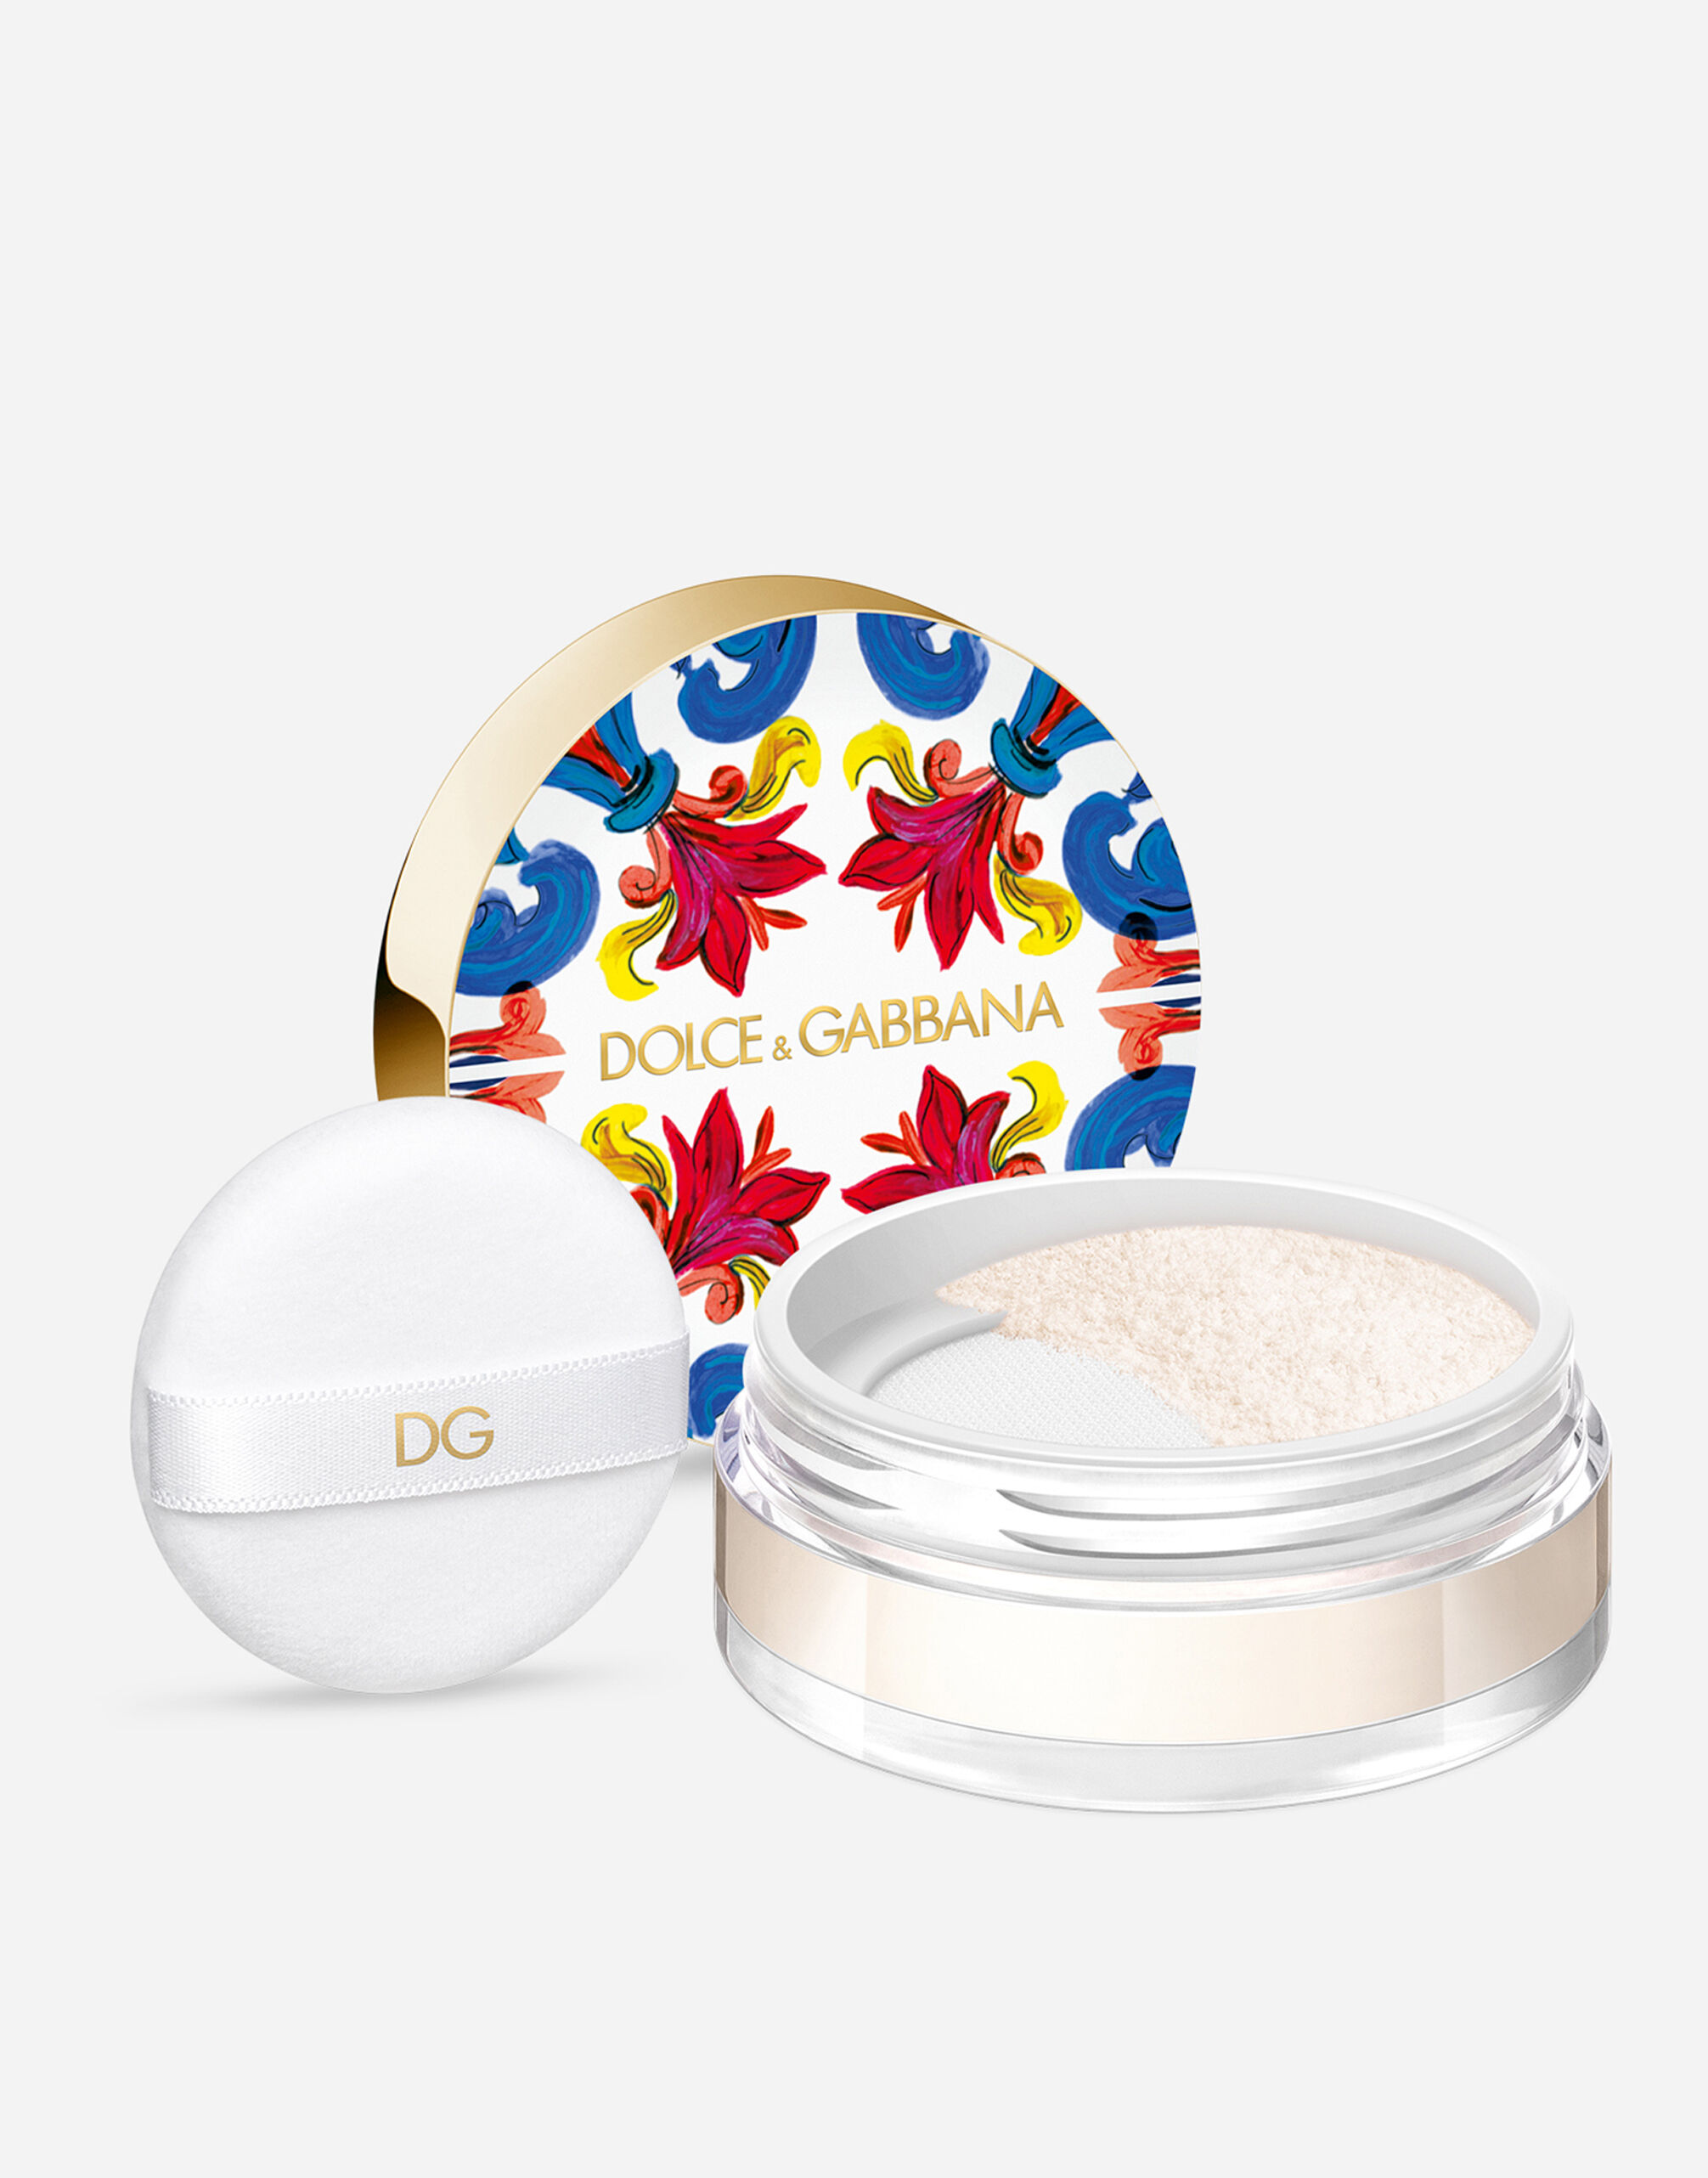 Dolce & Gabbana Translucent Loose Setting Powder Sunset 60 MKUPFCE0010